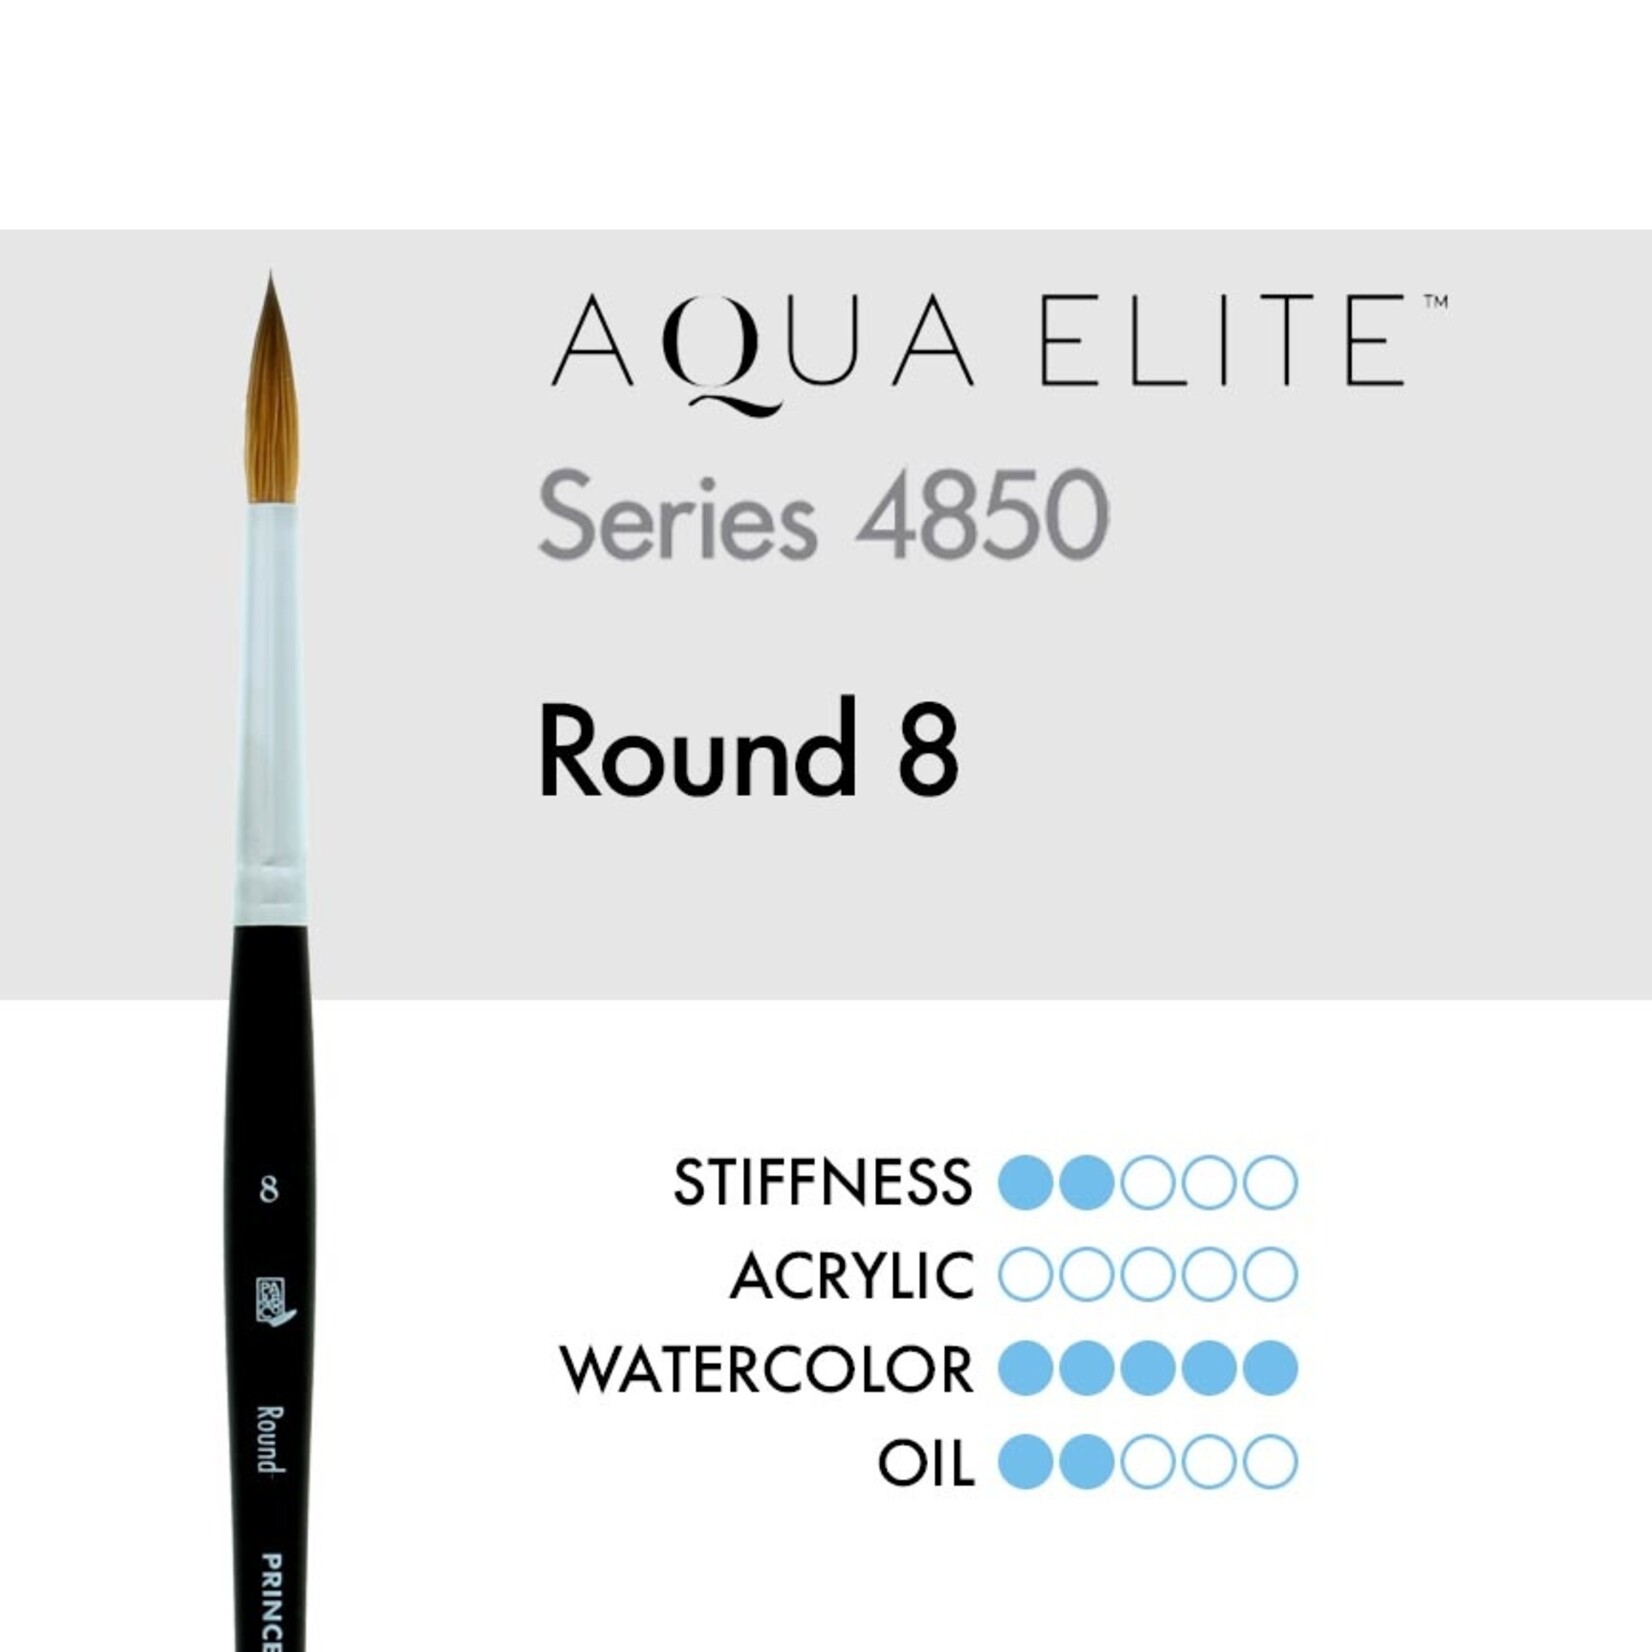 Princeton Aqua Elite Round 8